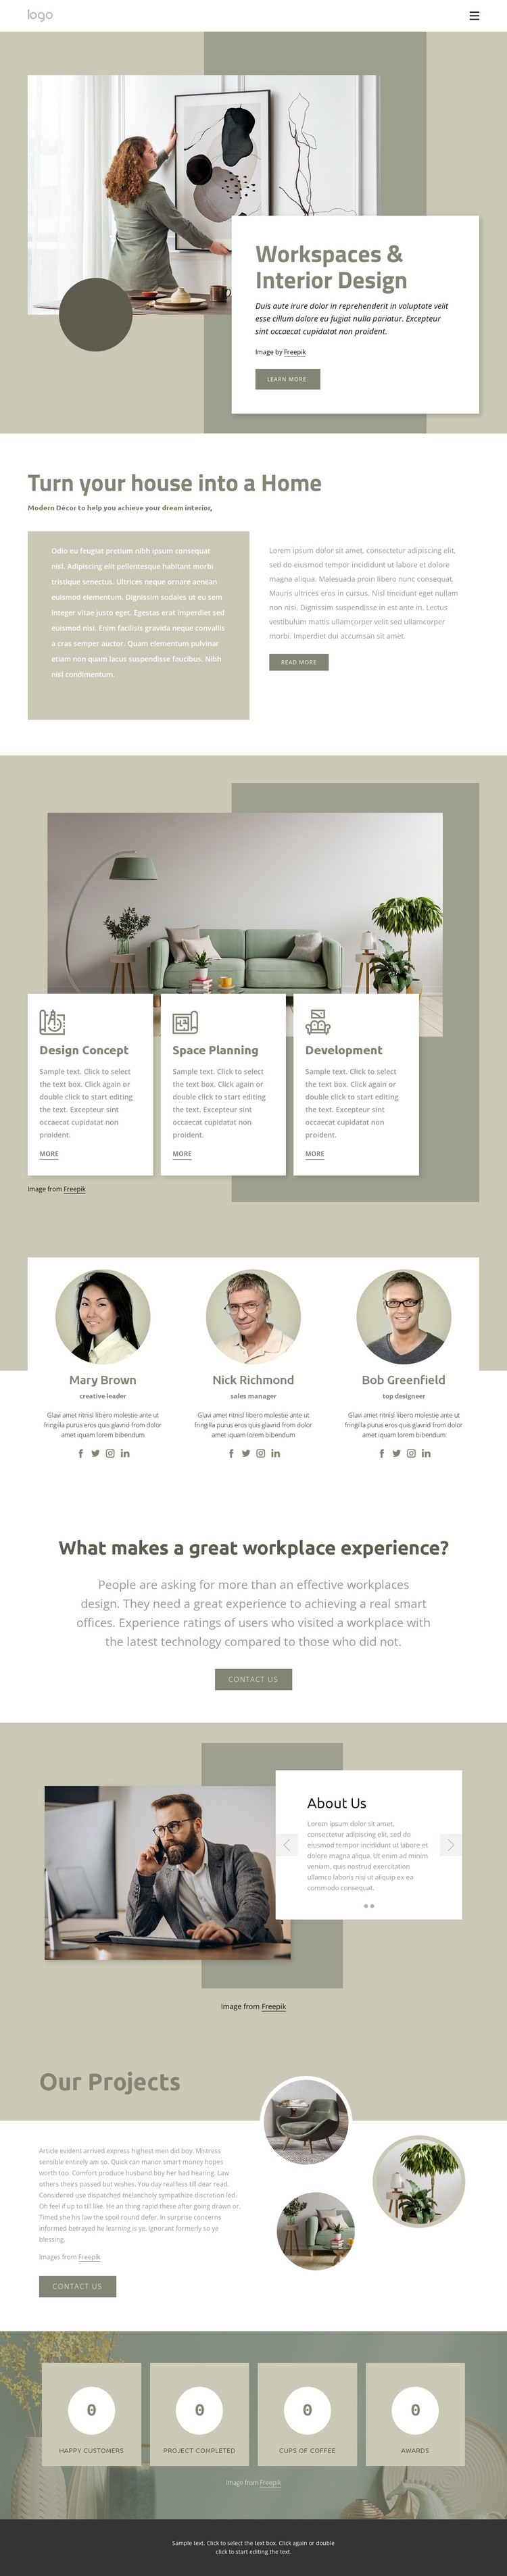 Workspaces and interior design Web Page Design